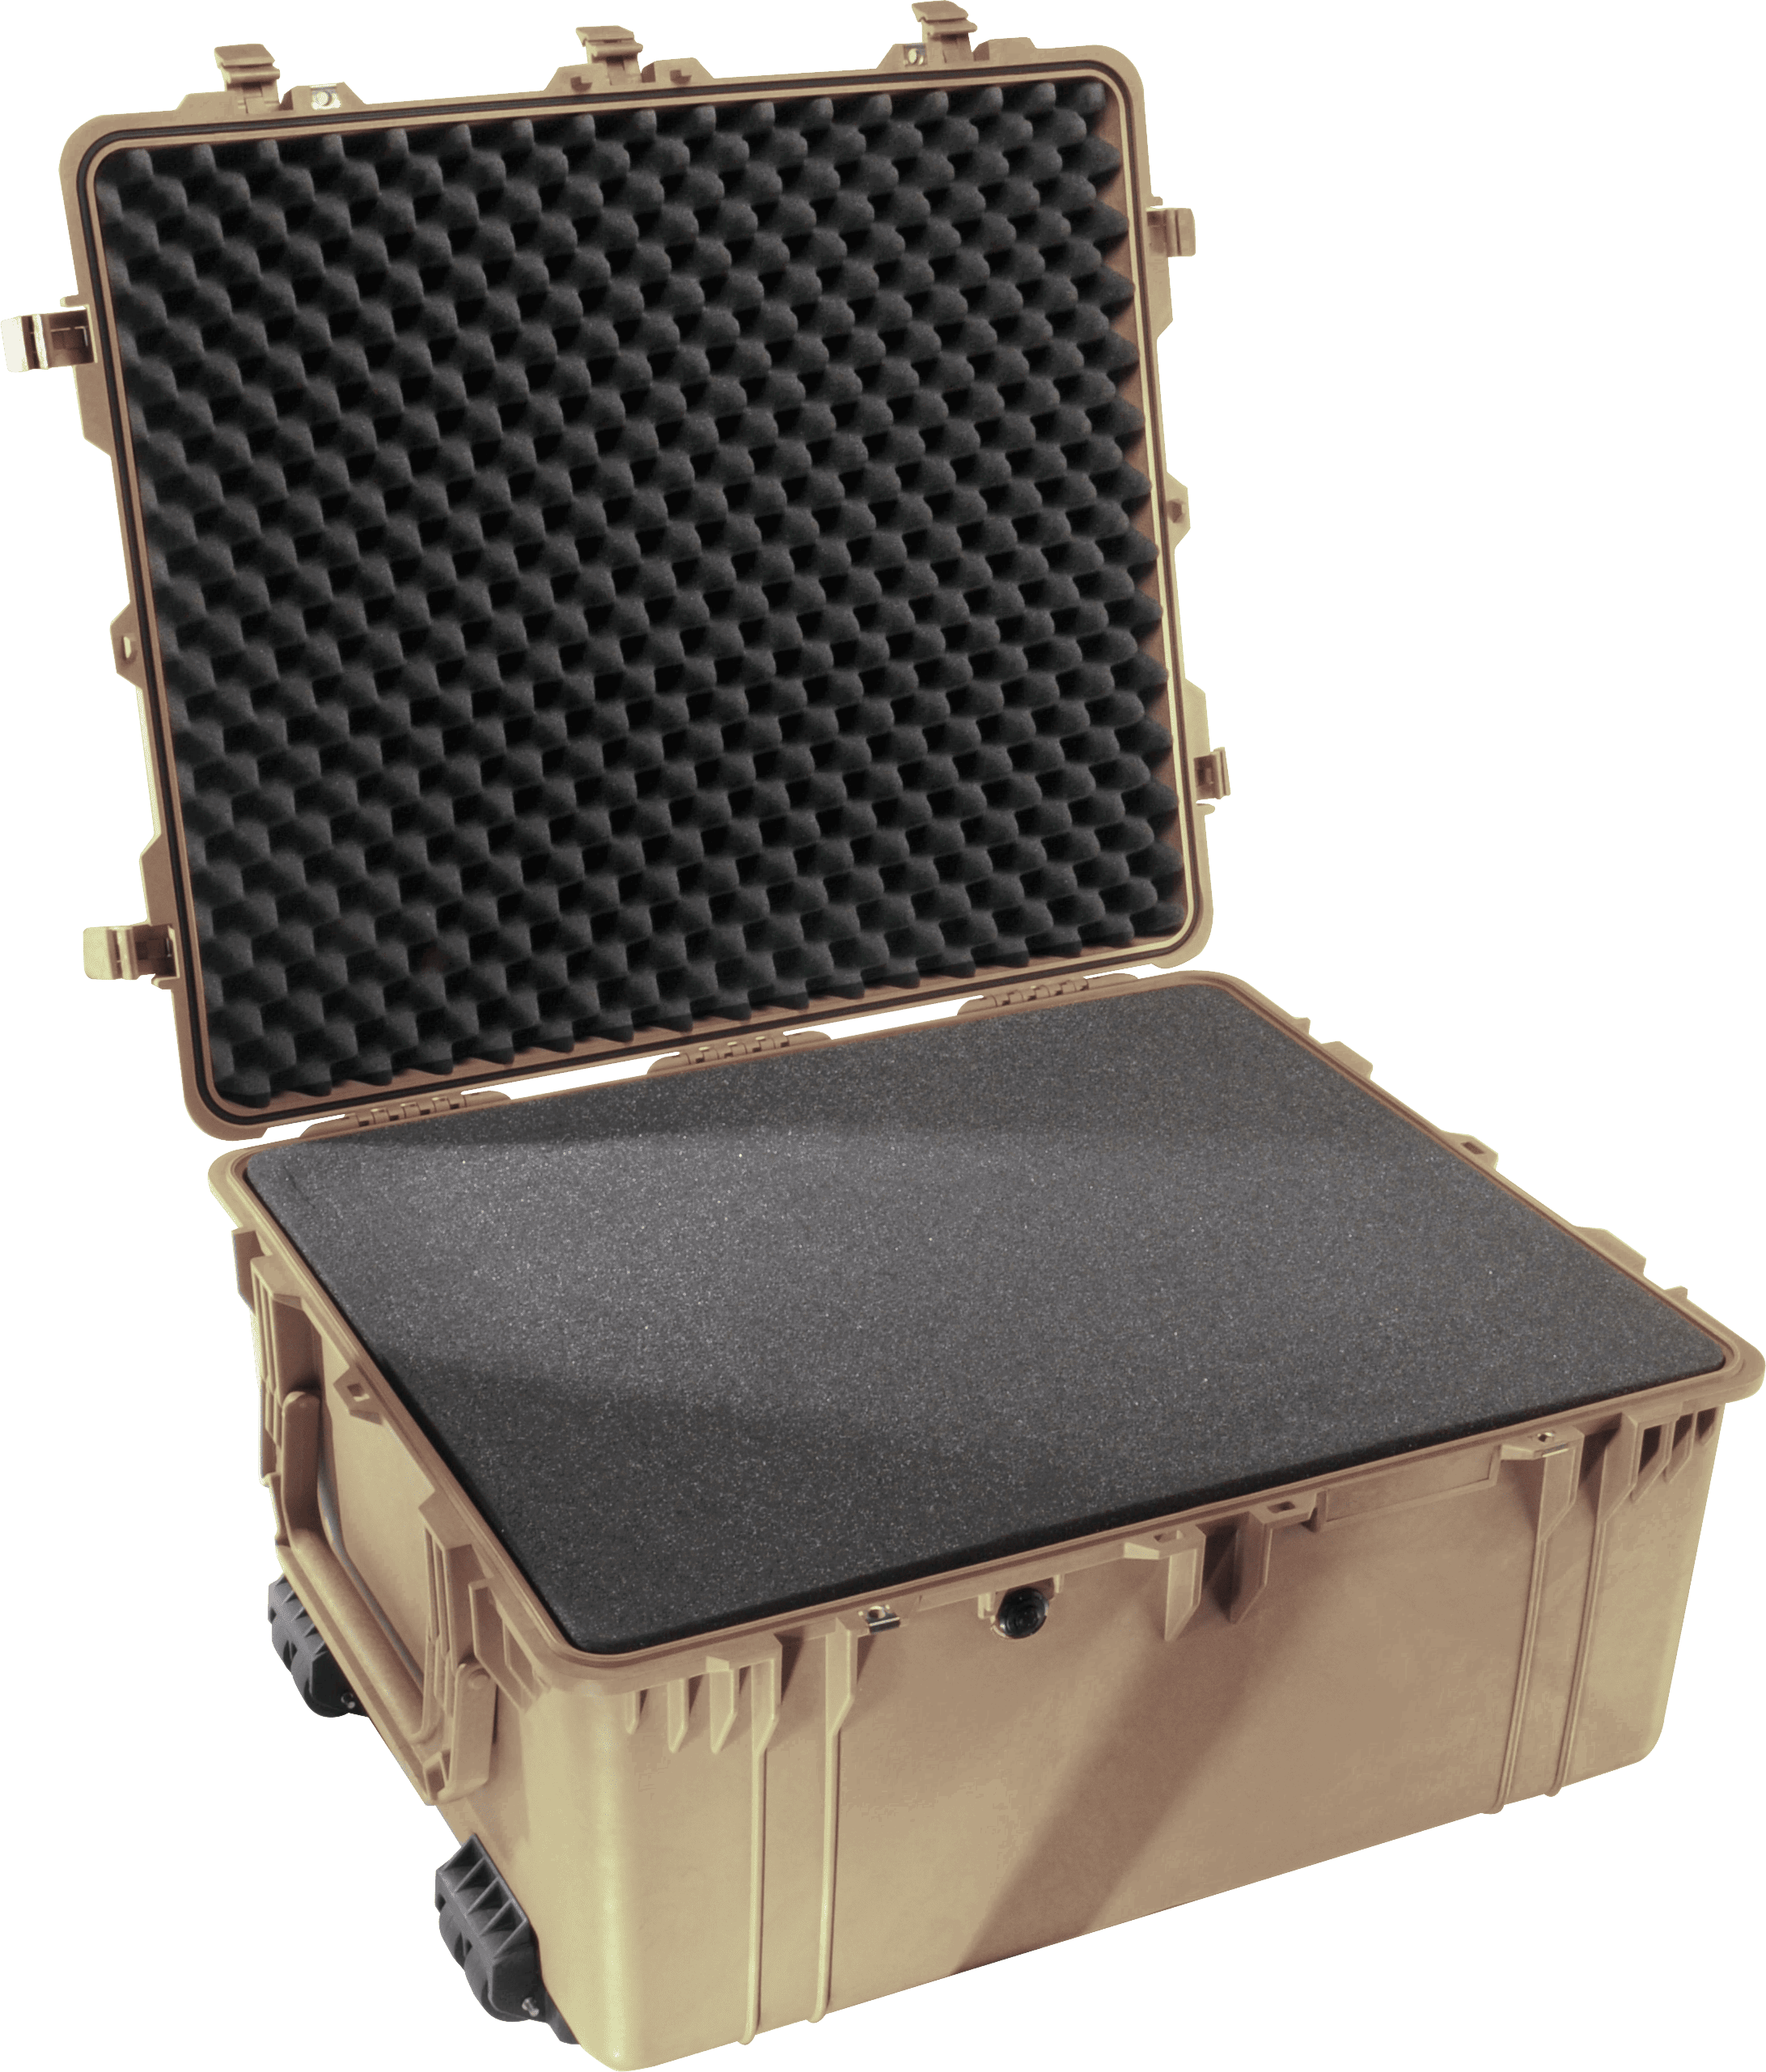 Pelican Products 1690 Protector Transport Case - Desert Tan, Foam